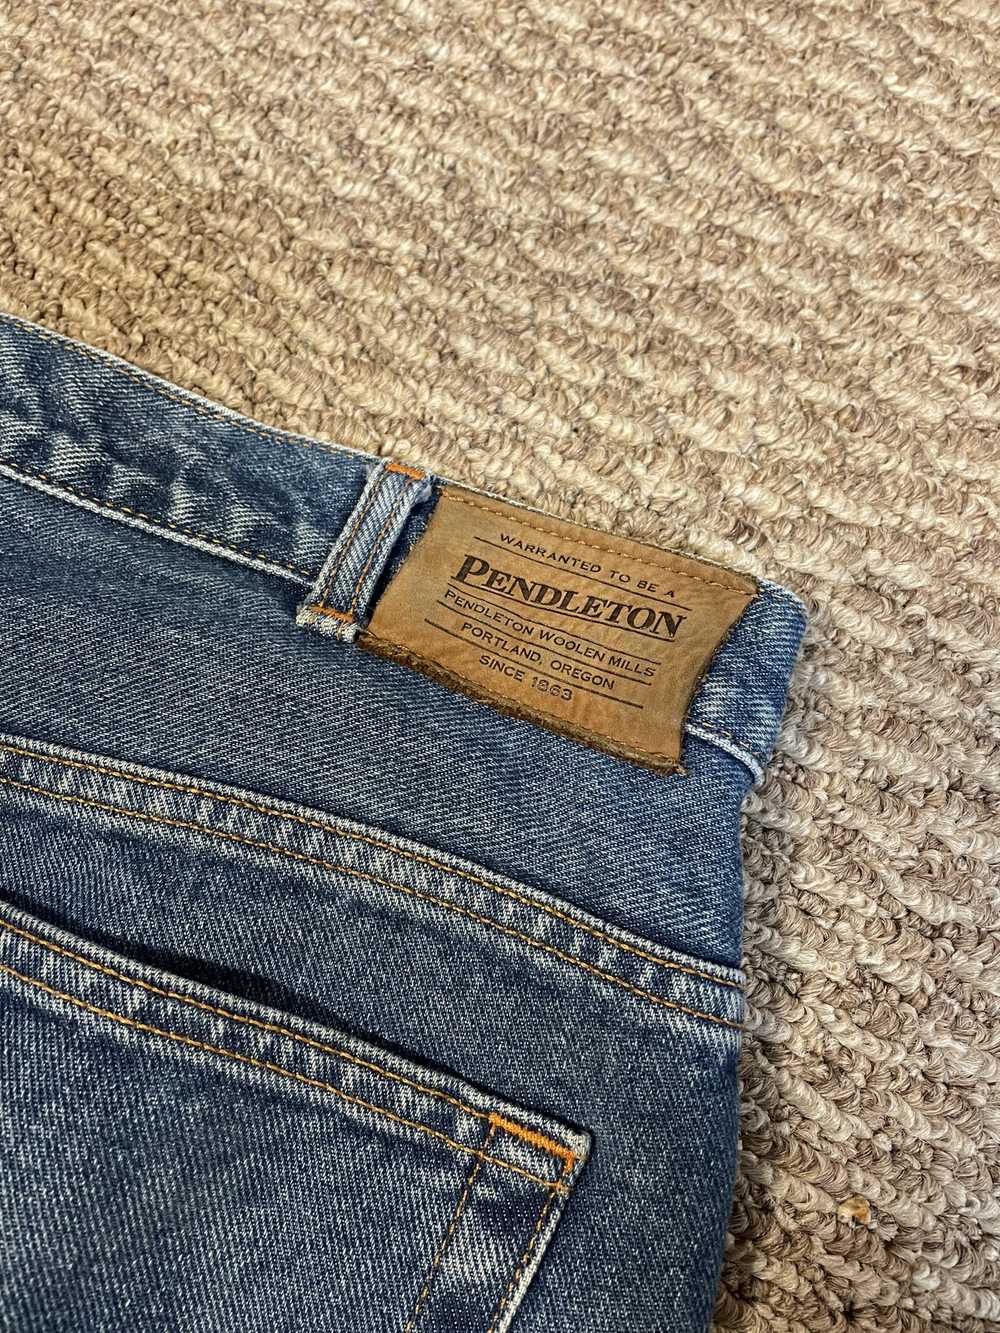 Pendleton × Vintage Vintage Pendleton Jeans Denim - image 6